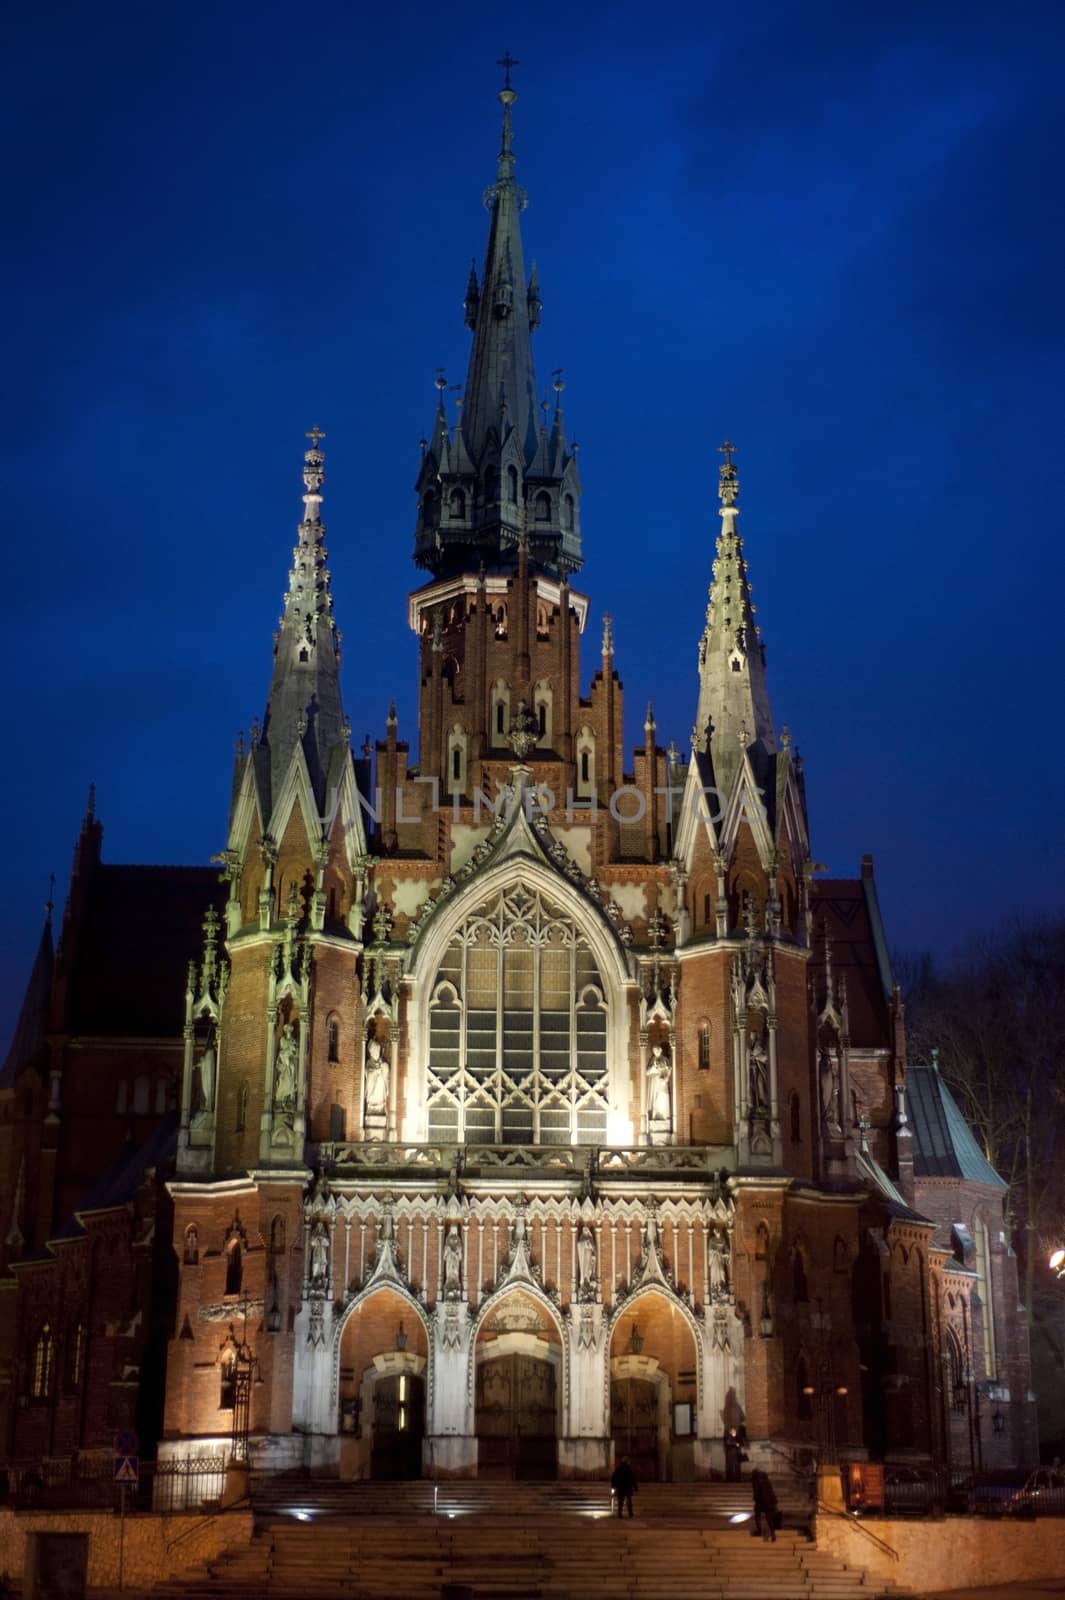 Church of St Joseph - a historic Roman Catholic church in Krakow at dusk, Poland